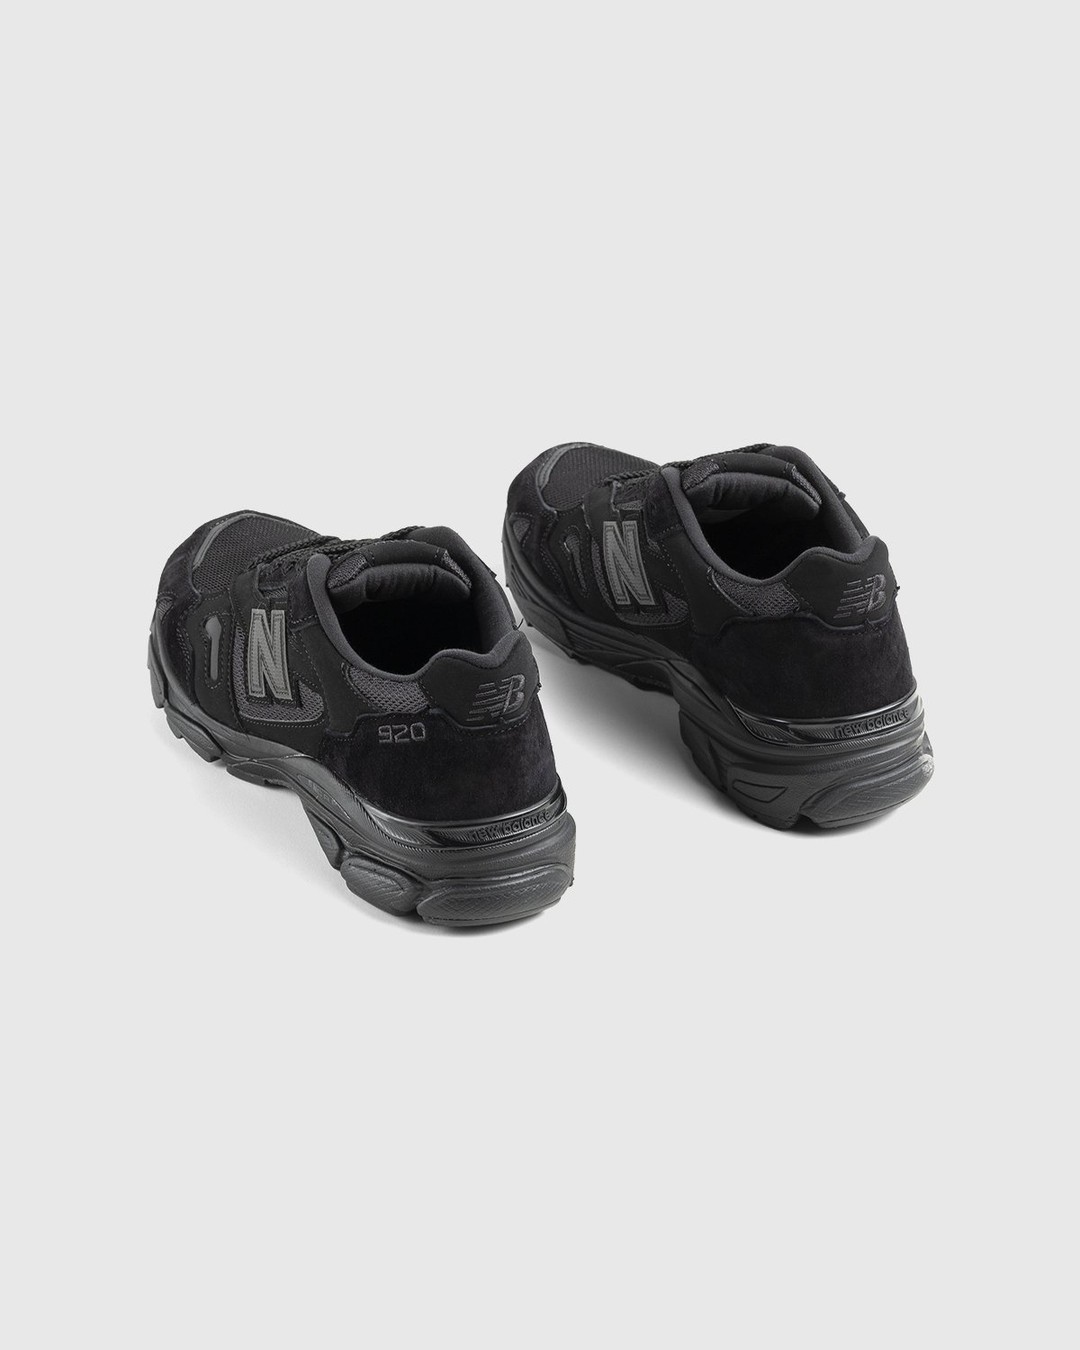 New Balance – M920 Black - Low Top Sneakers - Black - Image 4